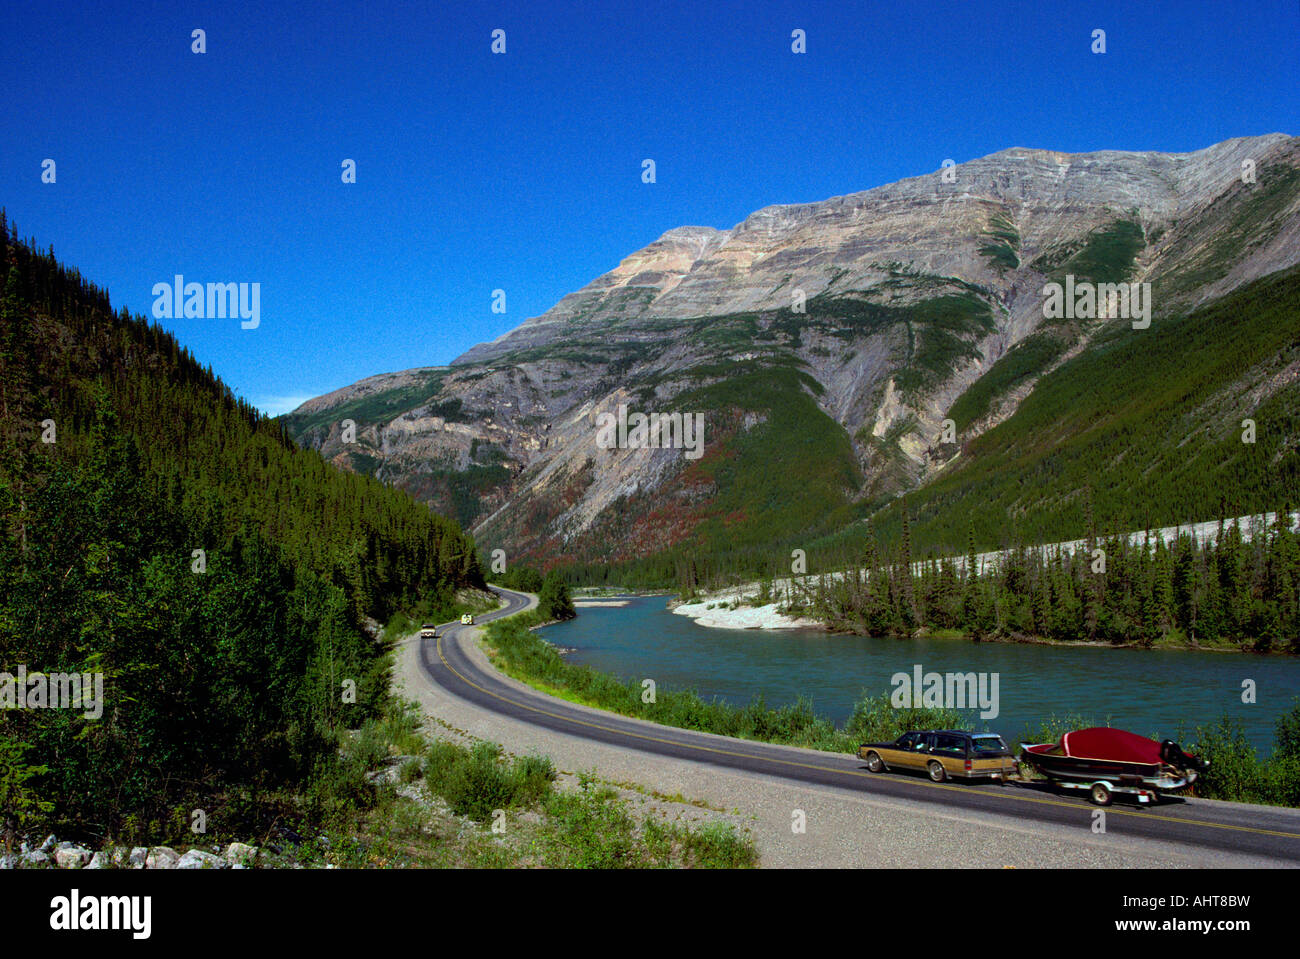 Alaska Highway entlang Racing River und nördlichen Rocky Mountains, British Columbia Kanada - betritt Schwemmfächer Fluss hinter Bäumen Stockfoto